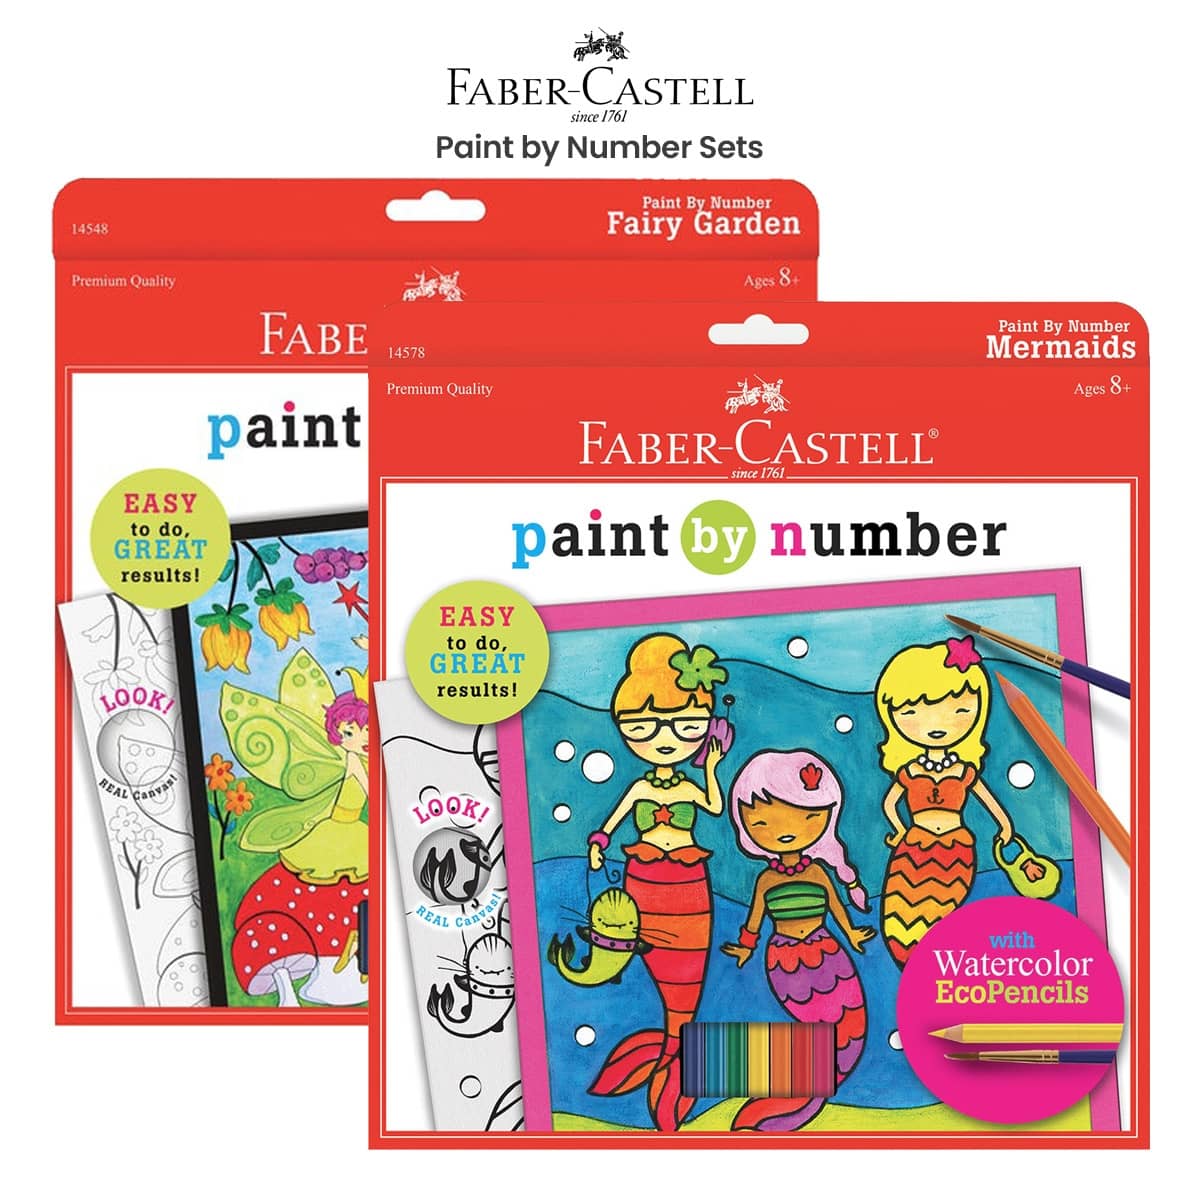 Faber-Castell My World of Art Portfolio for Kids - 8 Expandable